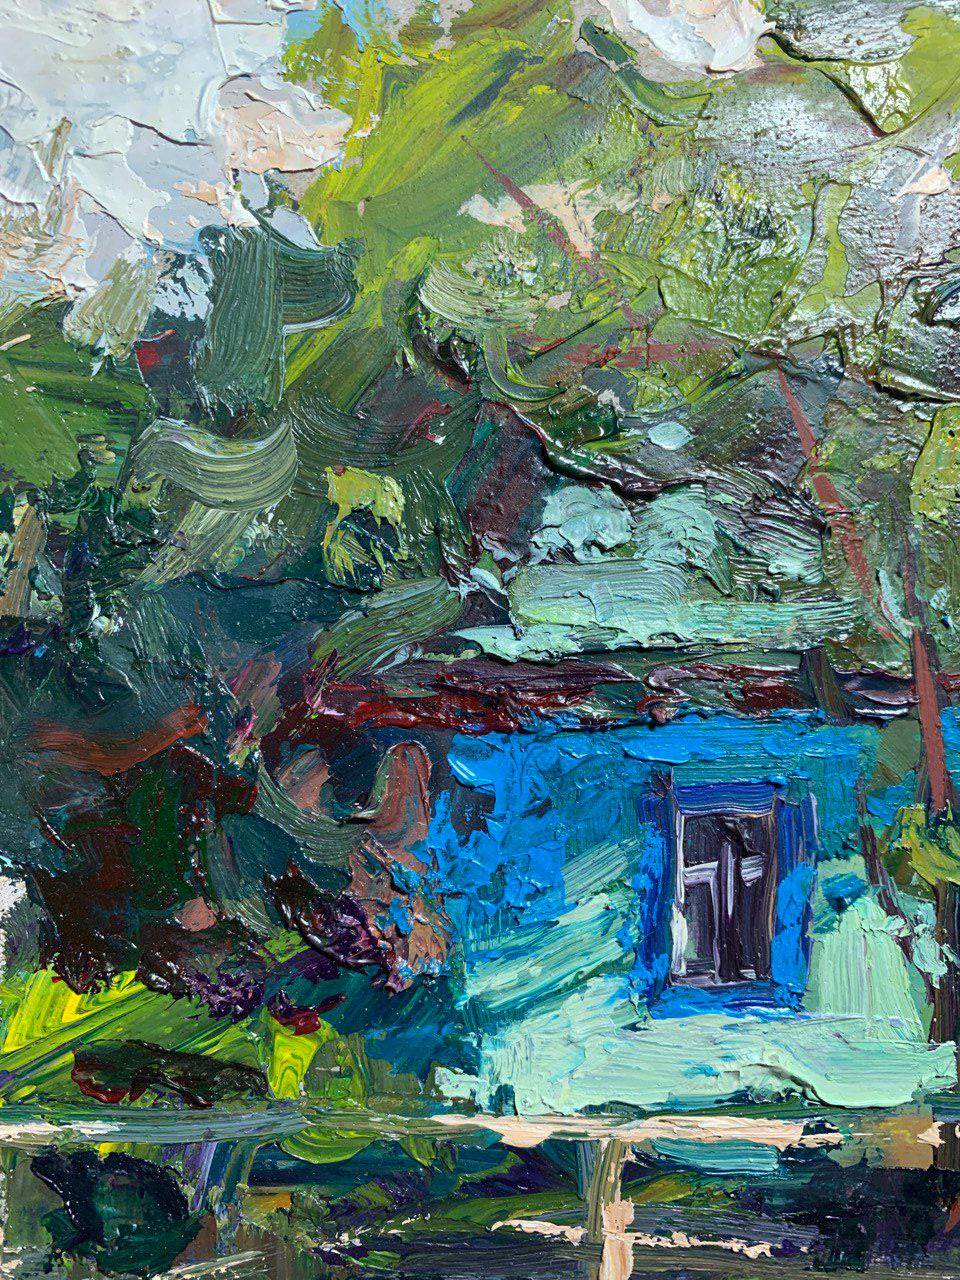 Cherednichenko's oil painting portrays the midday scene